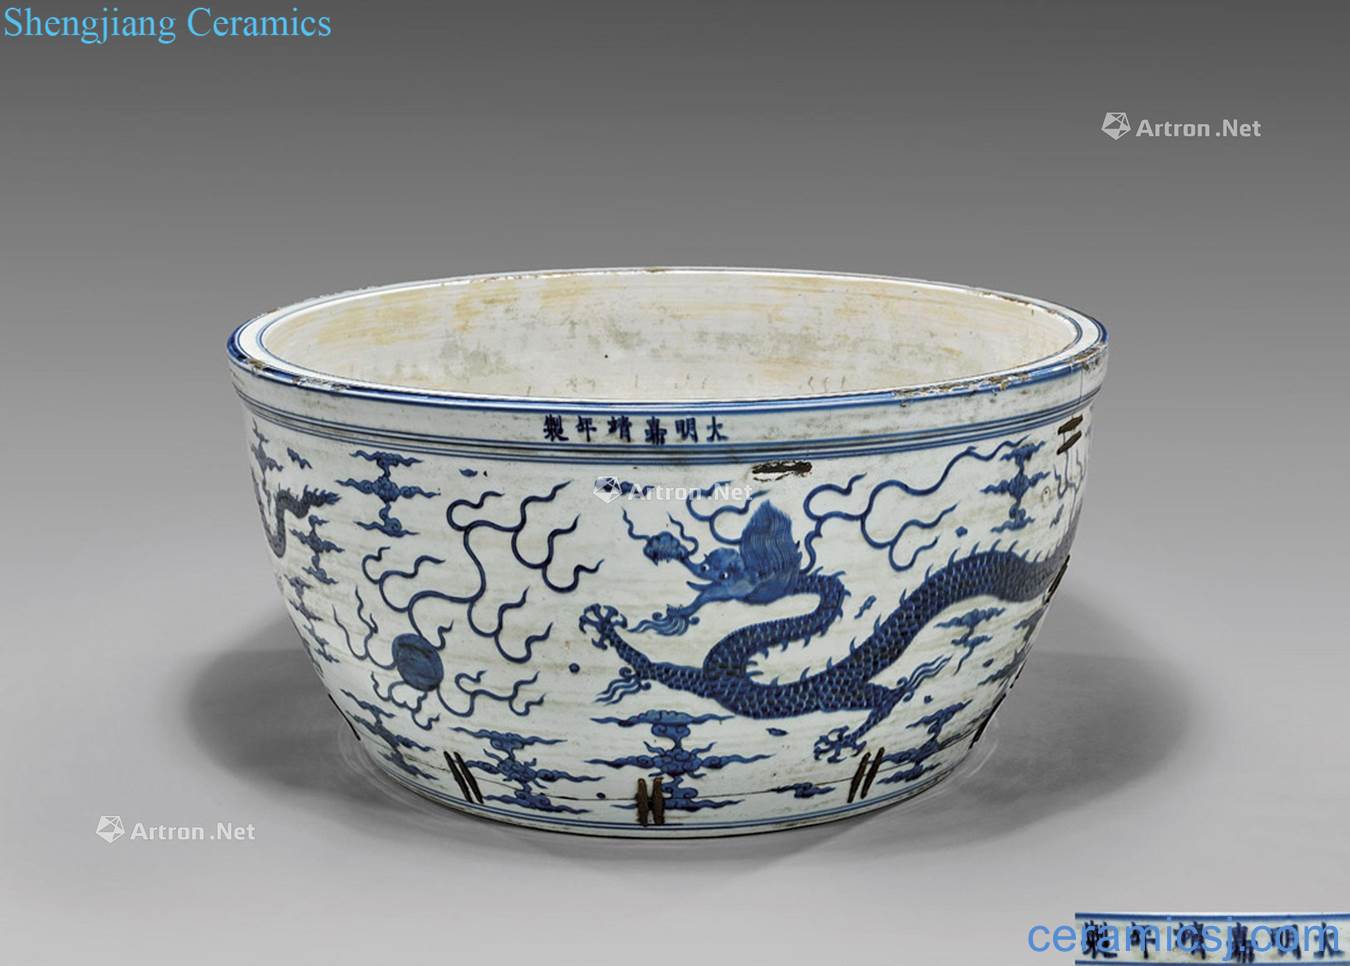 Blue and white porcelain aquarium jiajing of the Ming dynasty